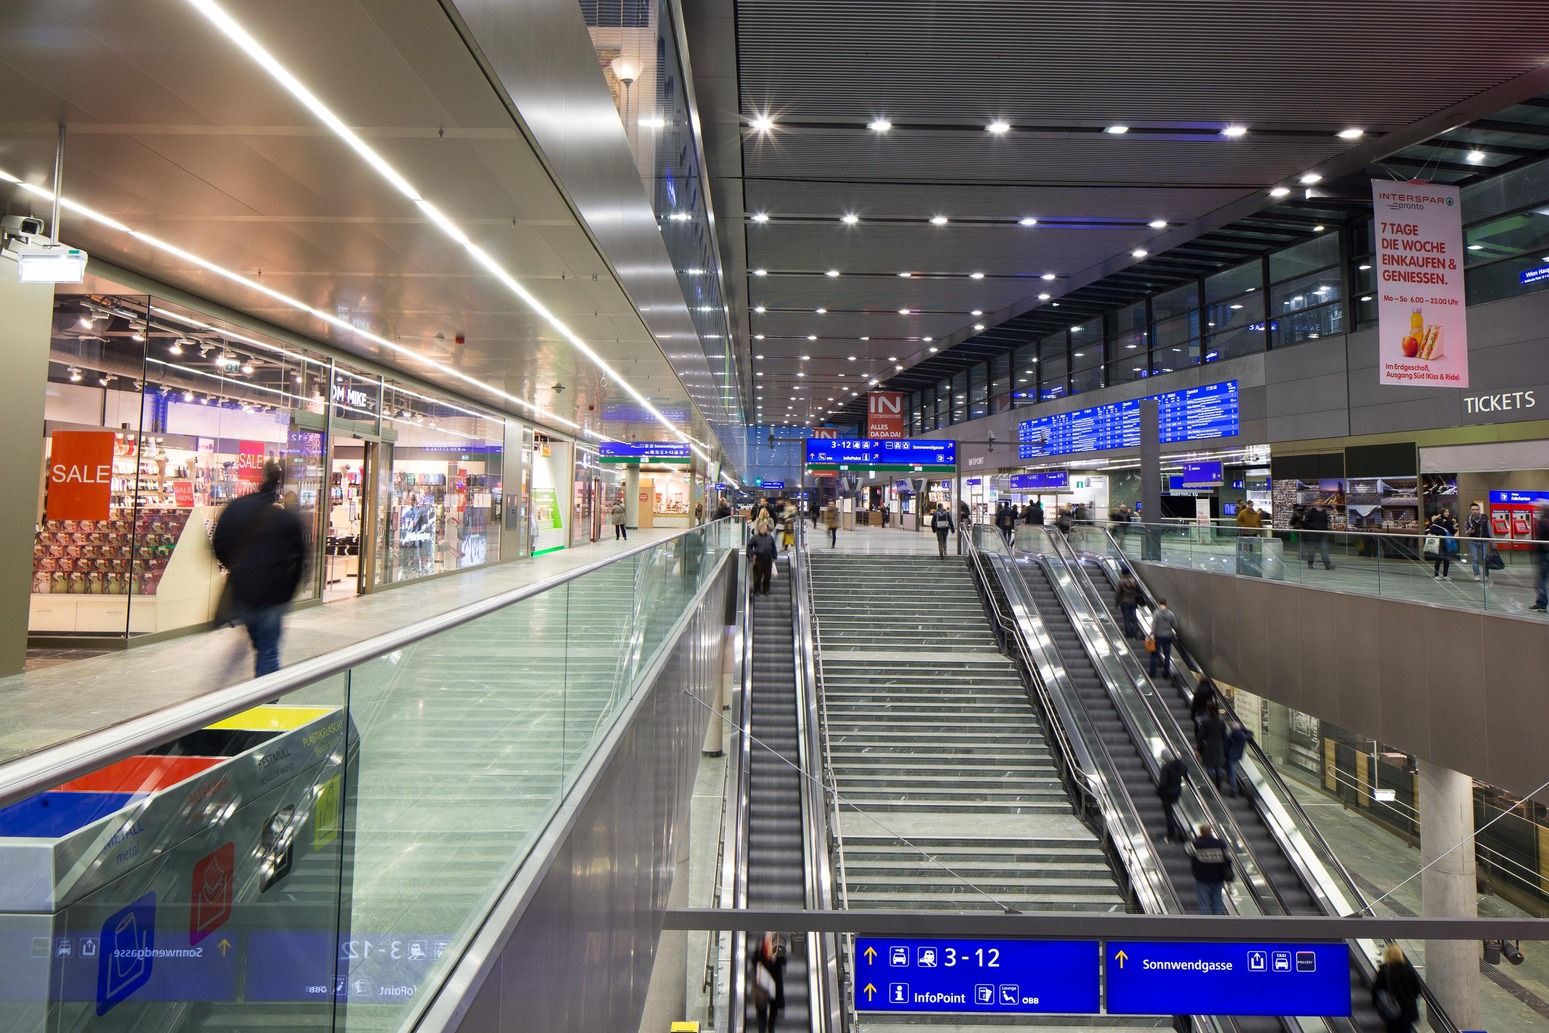 BahnhofCity Wien Hauptbahnhof